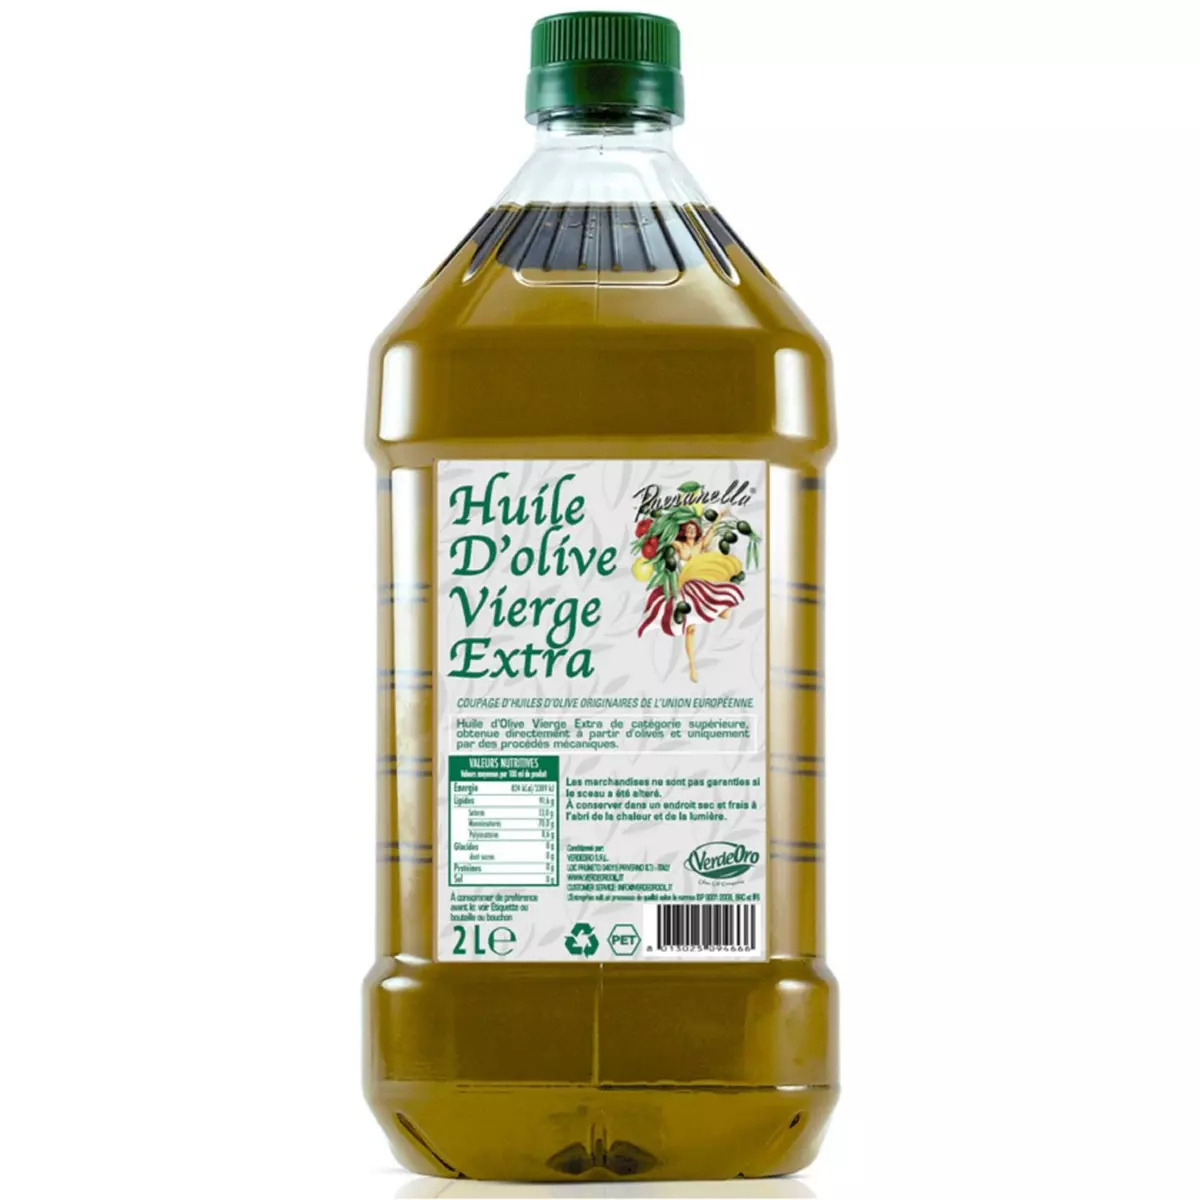 PAESANELLA Huile d'olive vierge extra 2l